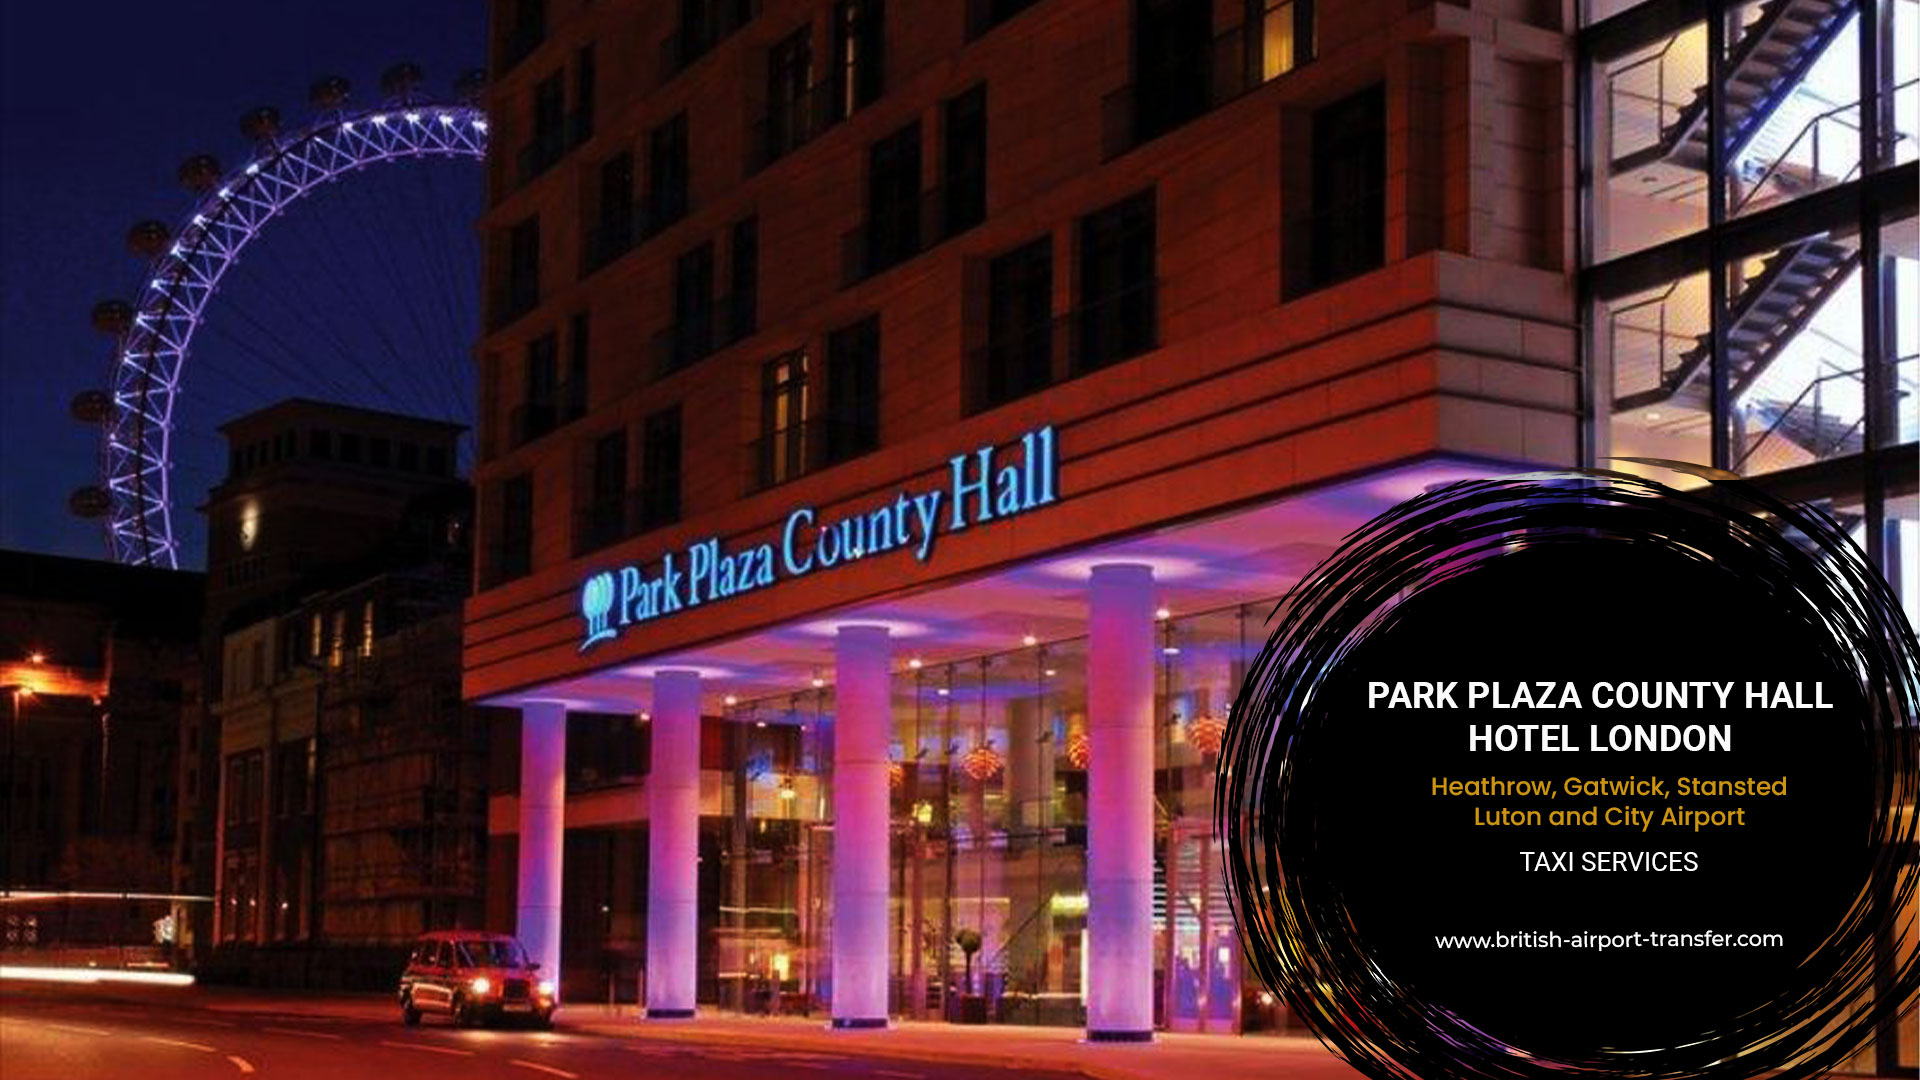 Taxi Service – Park Plaza County Hall Hotel London / SE1 7RY